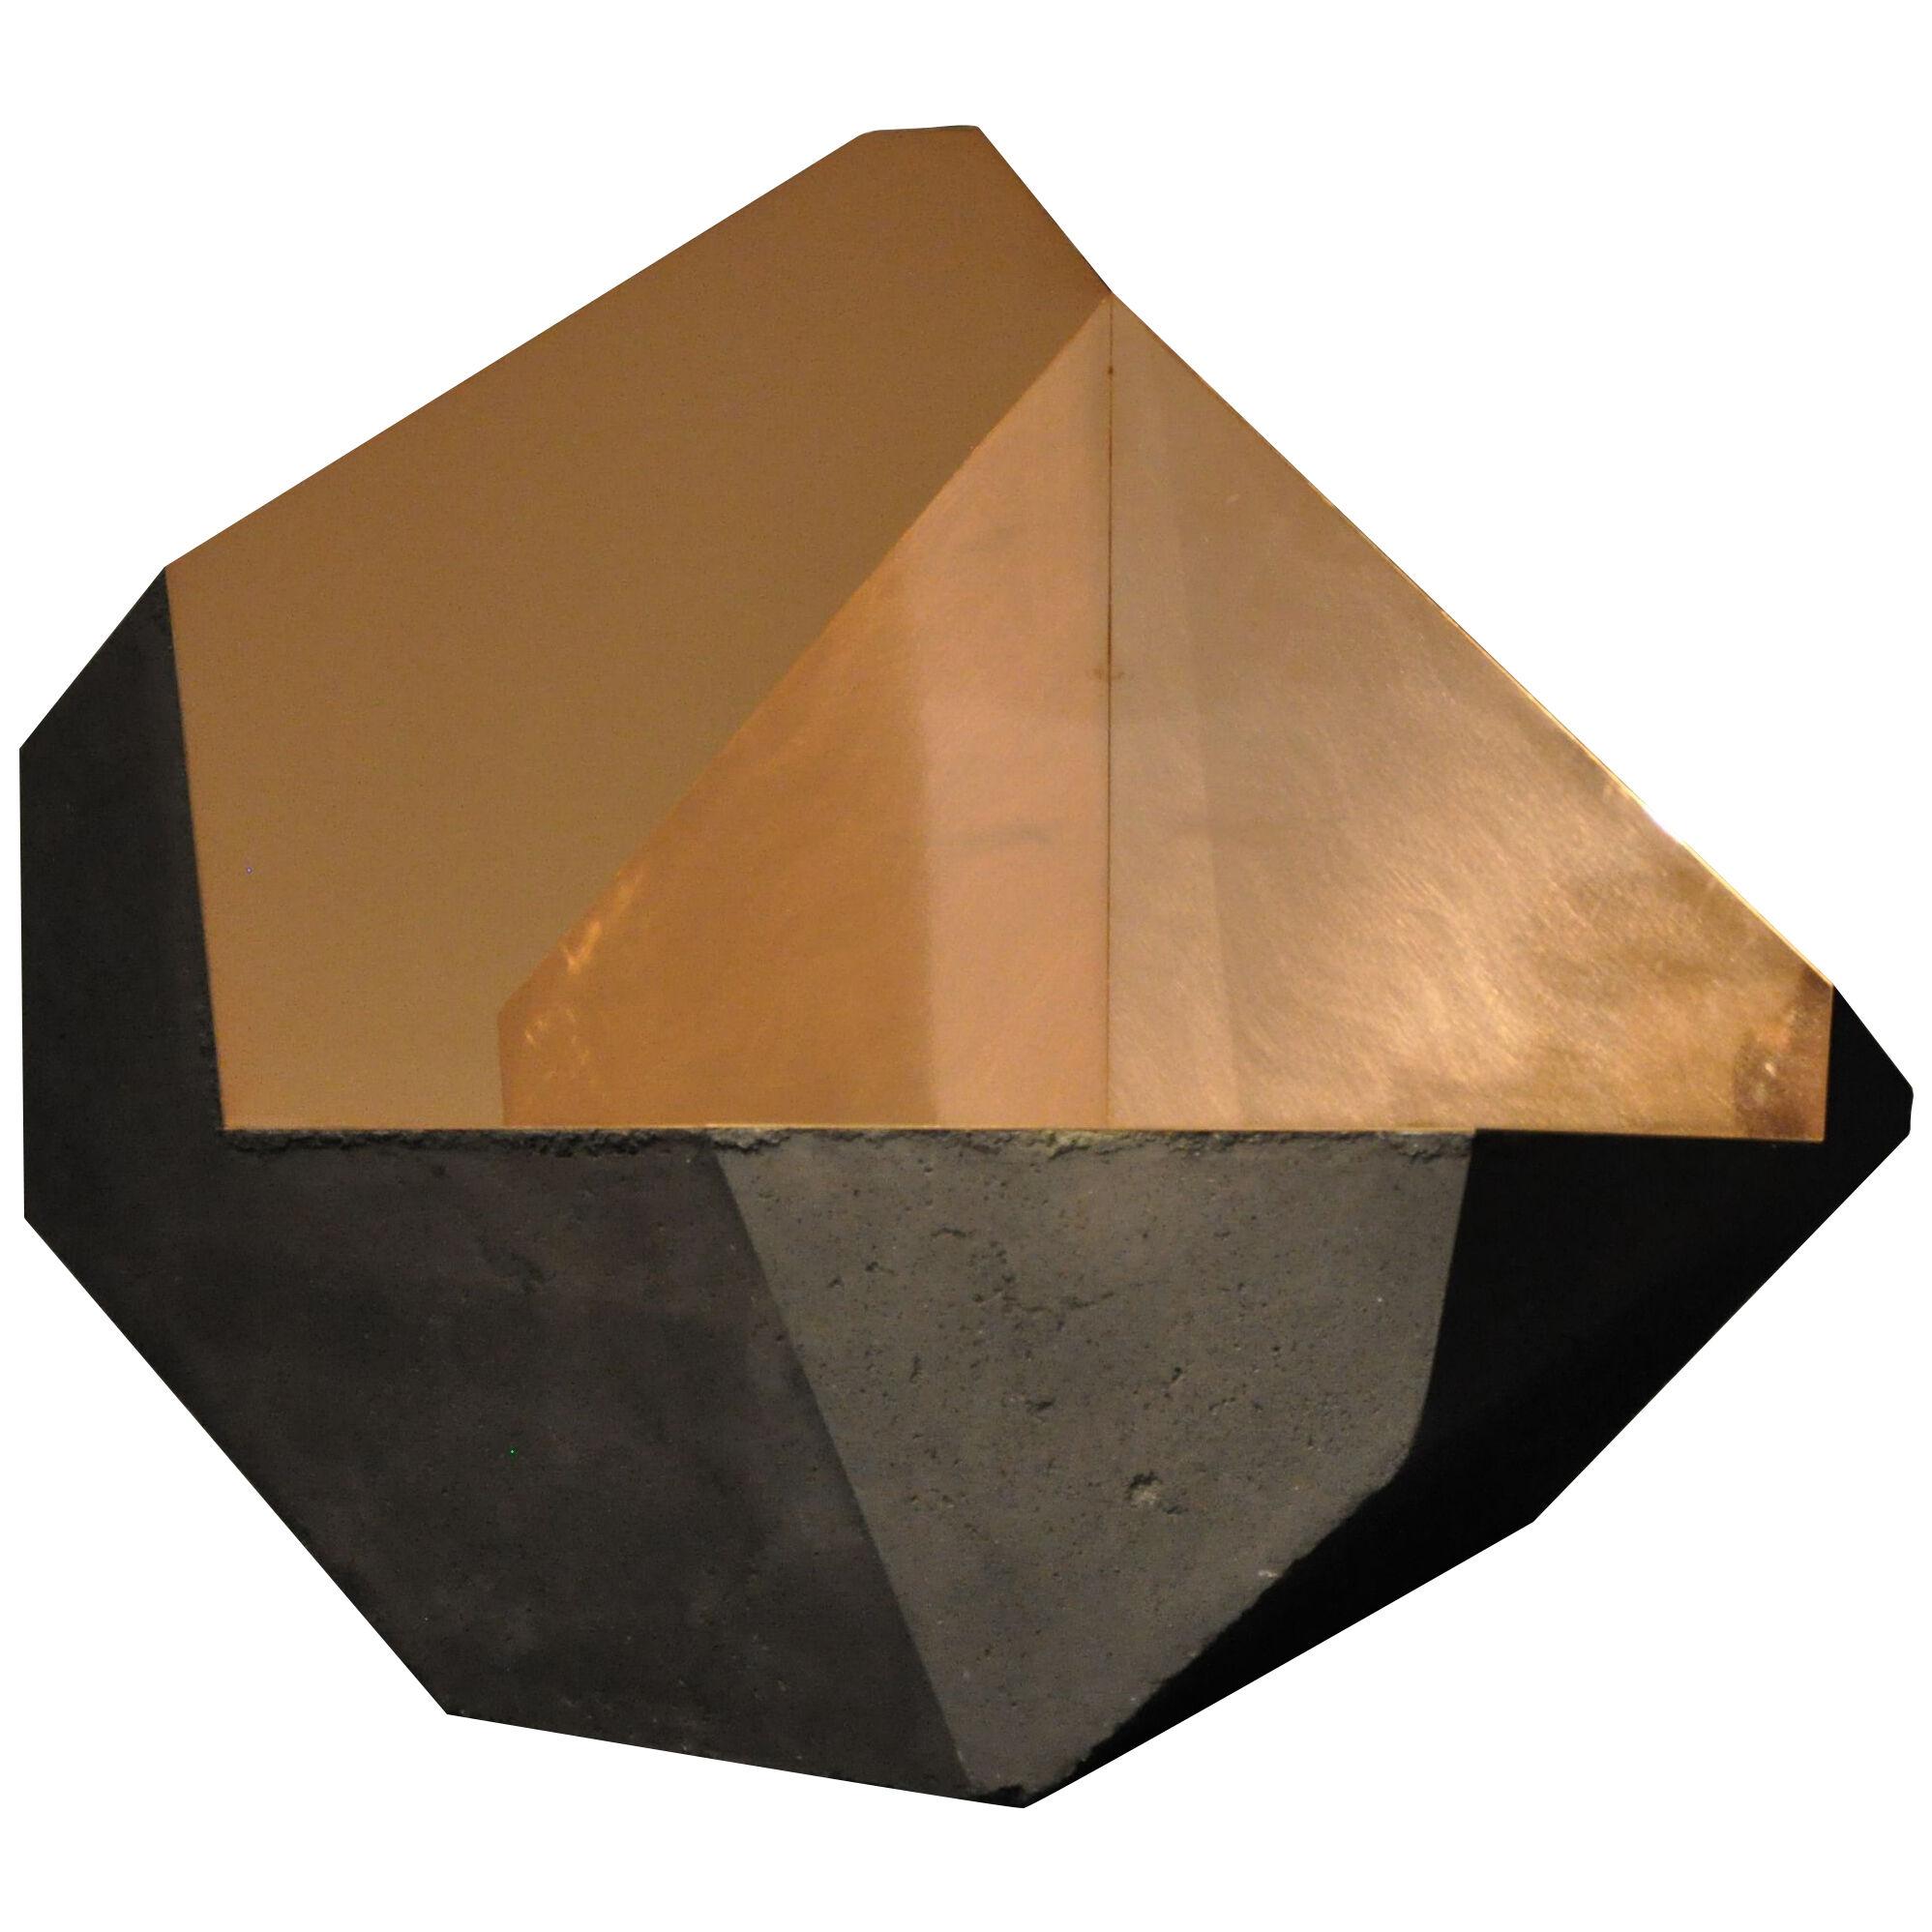 Tom Price, "Carbon Void Bronze", Sculpture